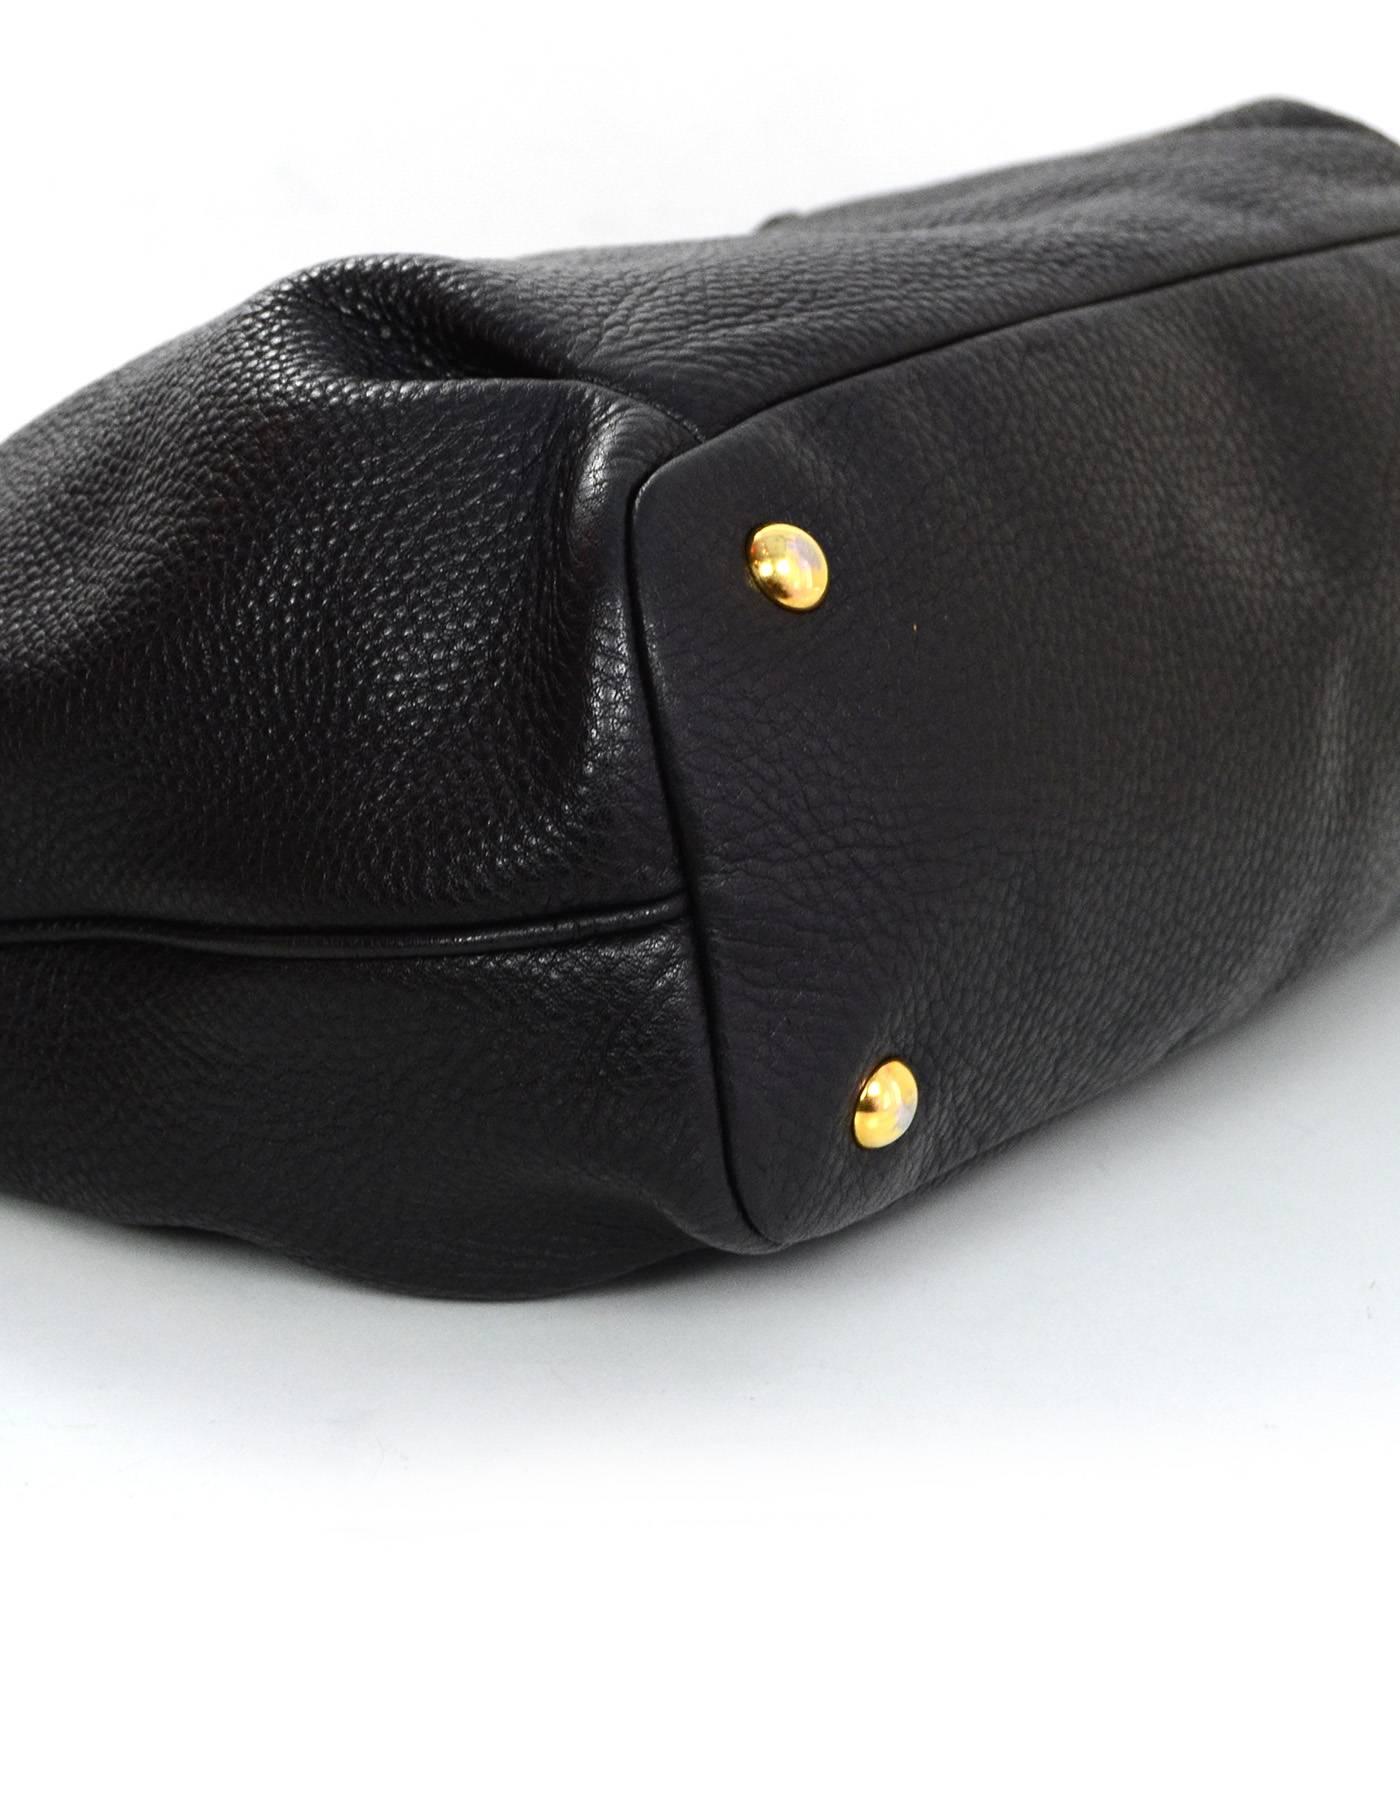 Miu Miu Black Leather Tote w. Strap In Excellent Condition In New York, NY